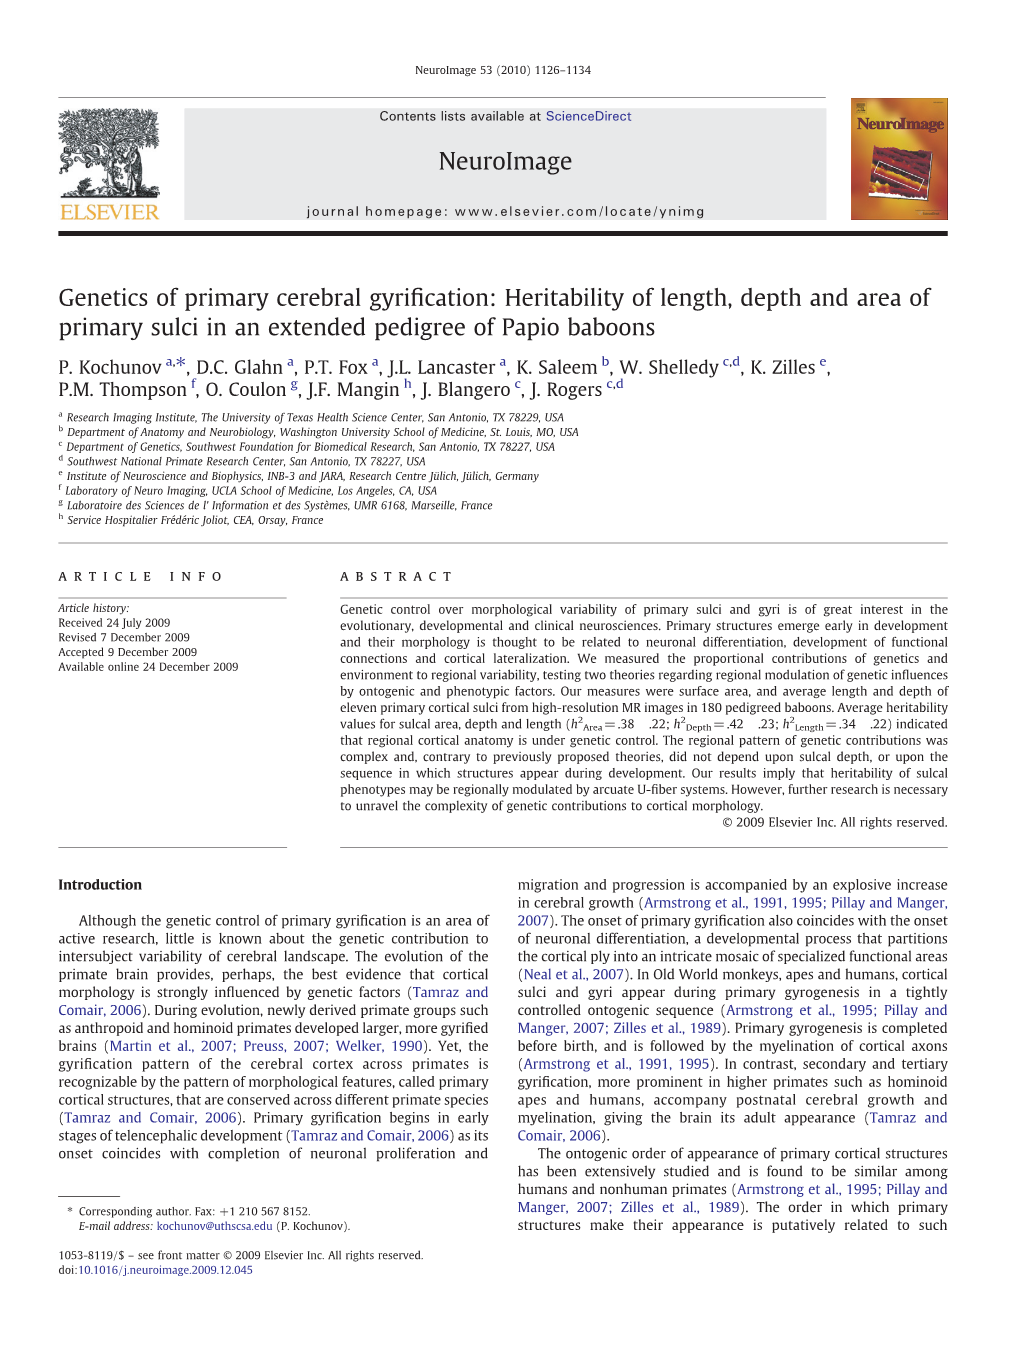 Genetics of Primary Cerebral Gyrification: Heritability of Length